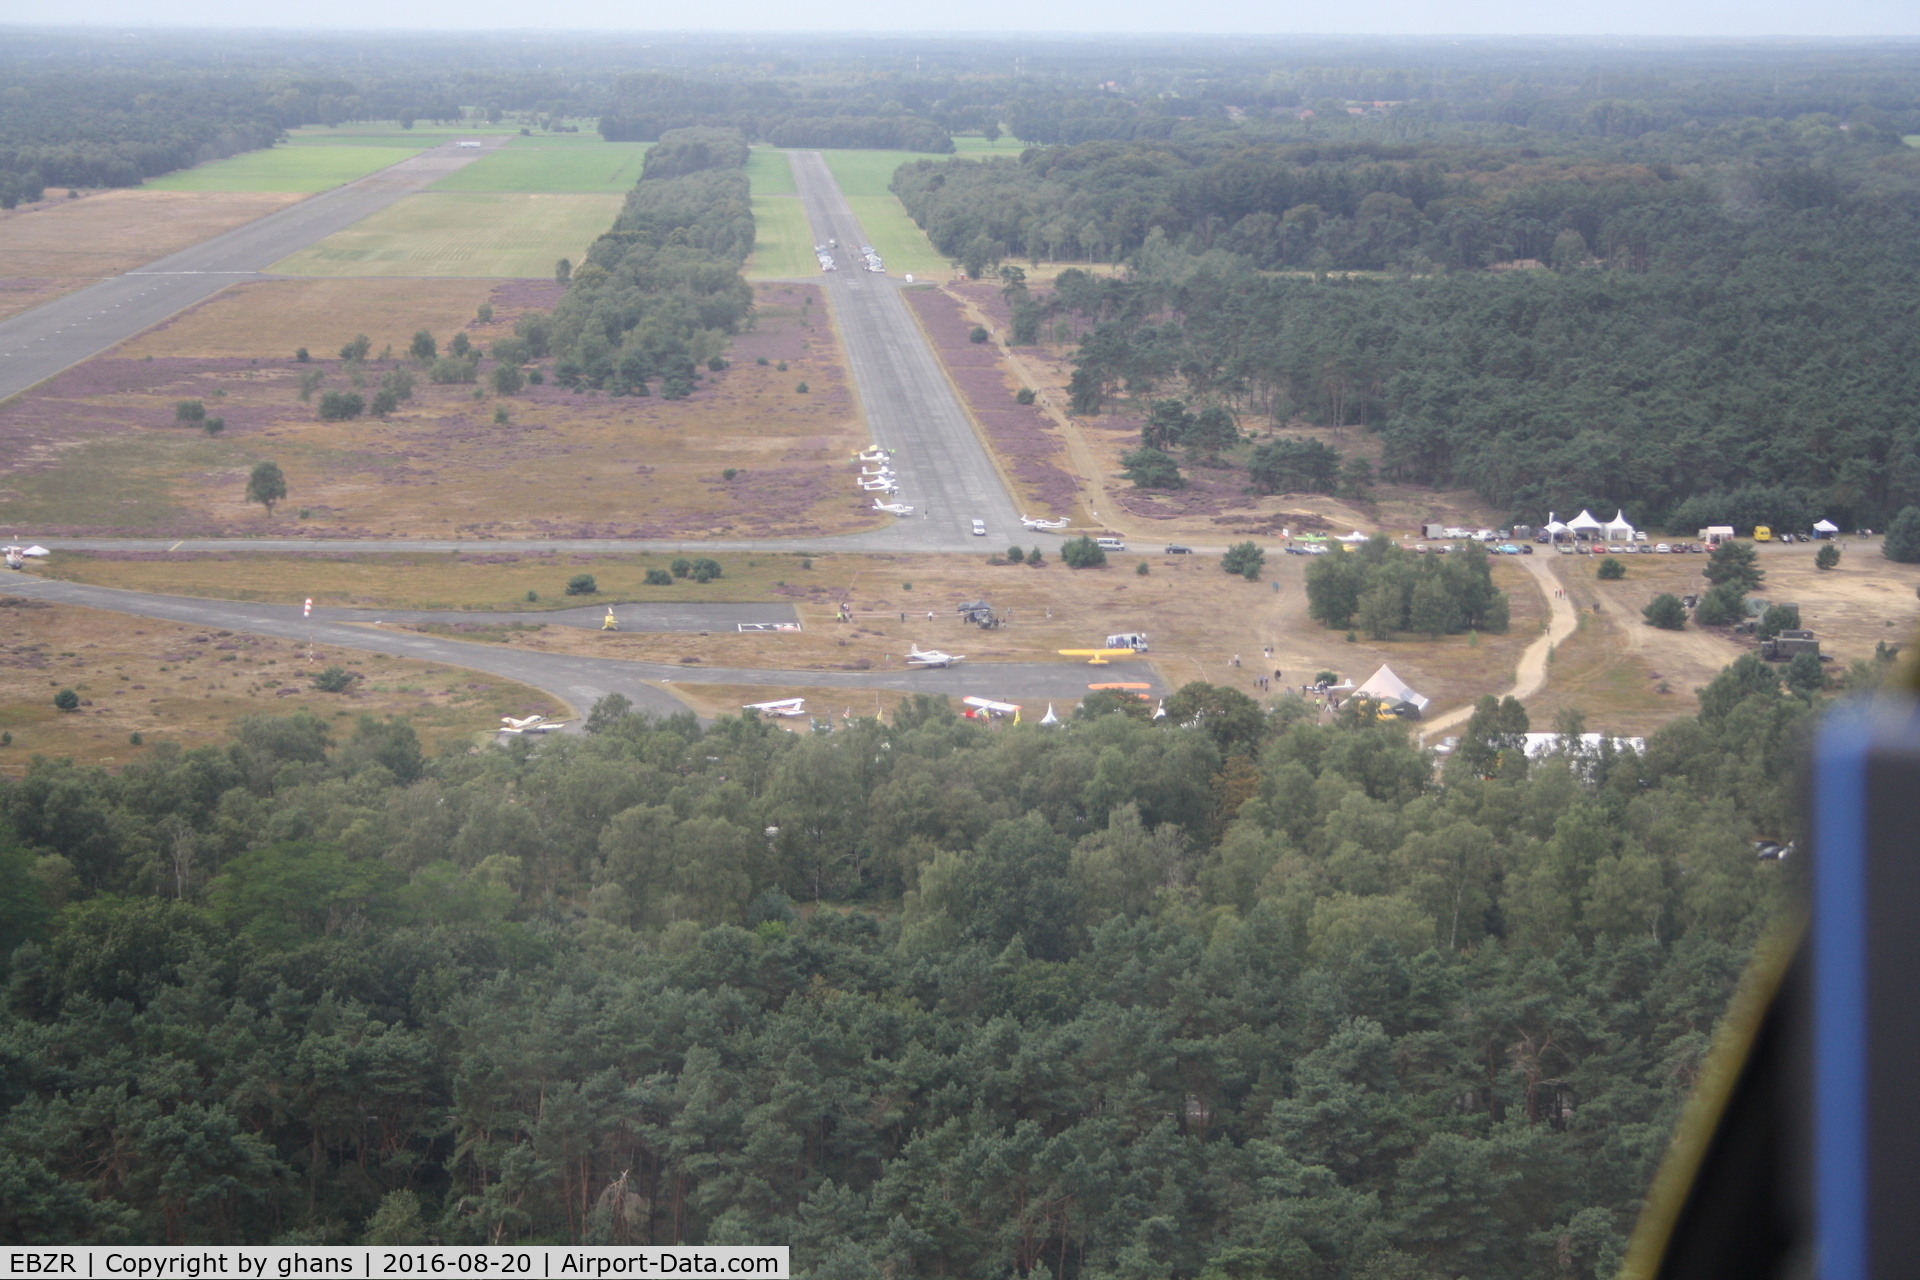 Oostmalle AB Airport, Zoersel Belgium (EBZR) - Taken from helicopter OO-HCA